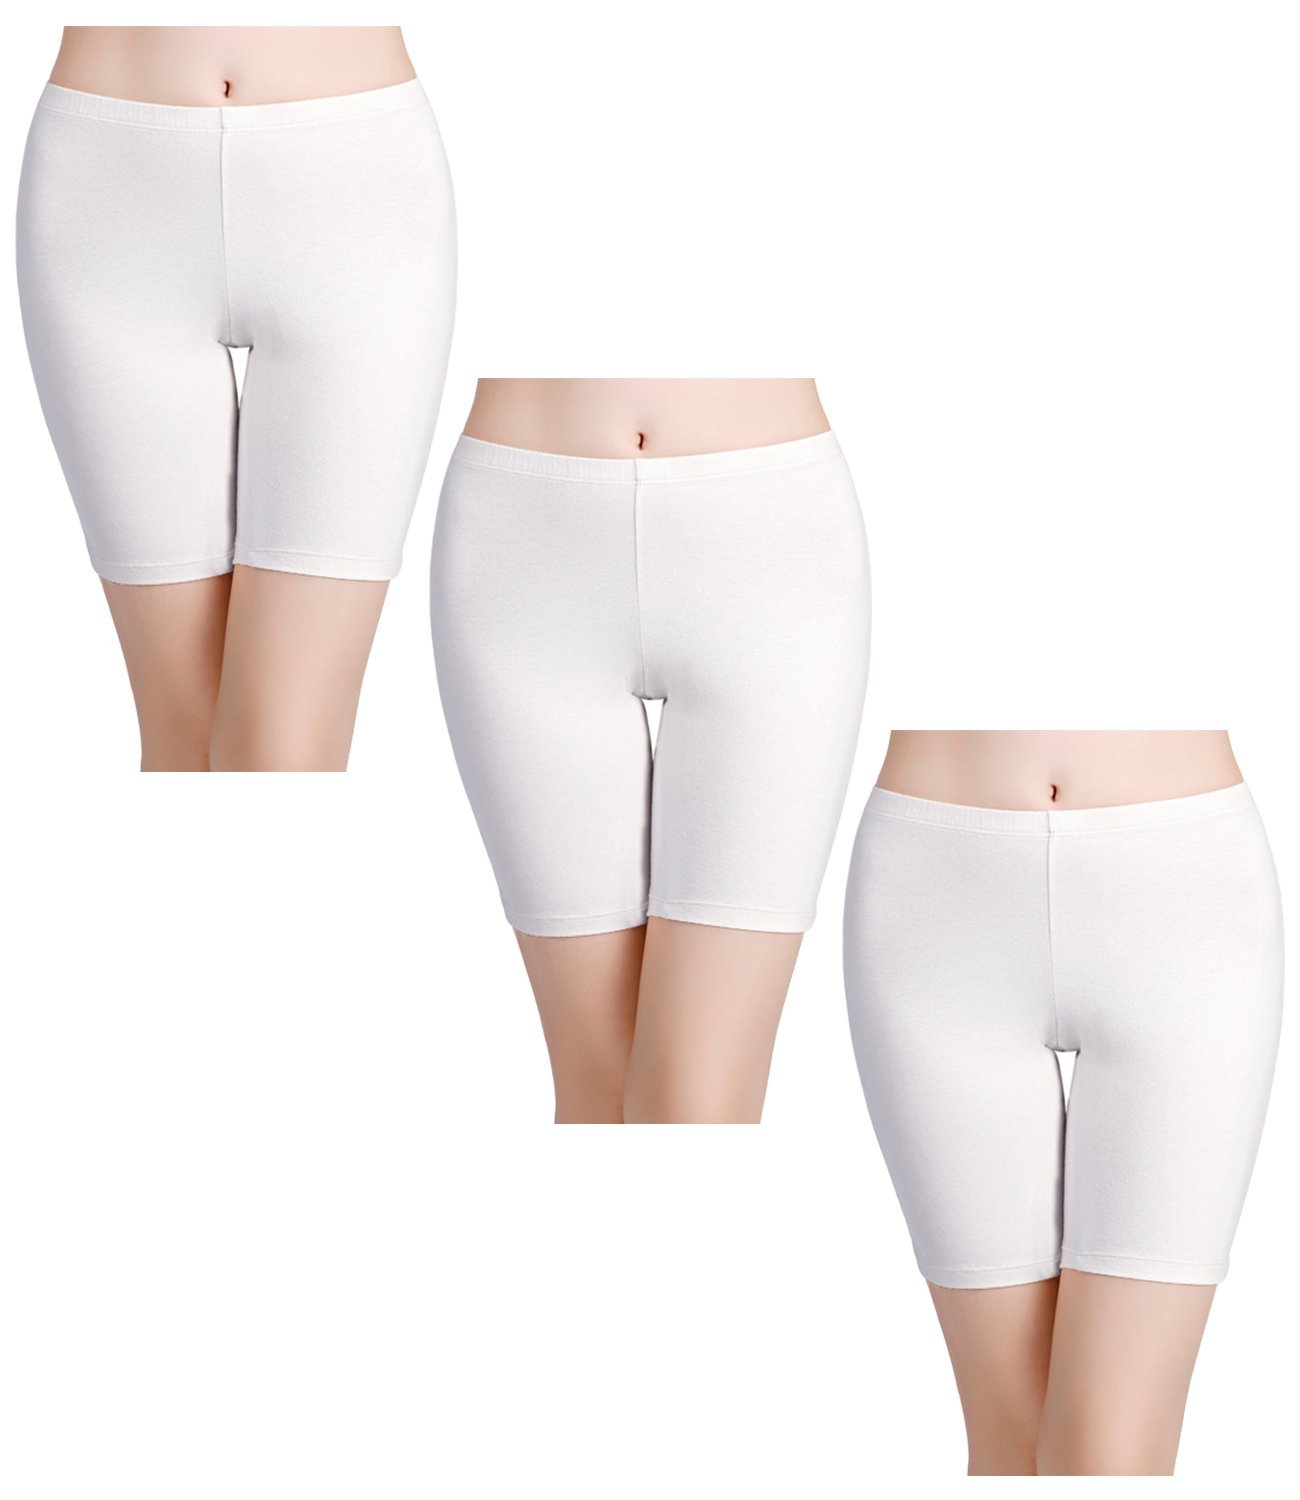 white cotton boy shorts for women